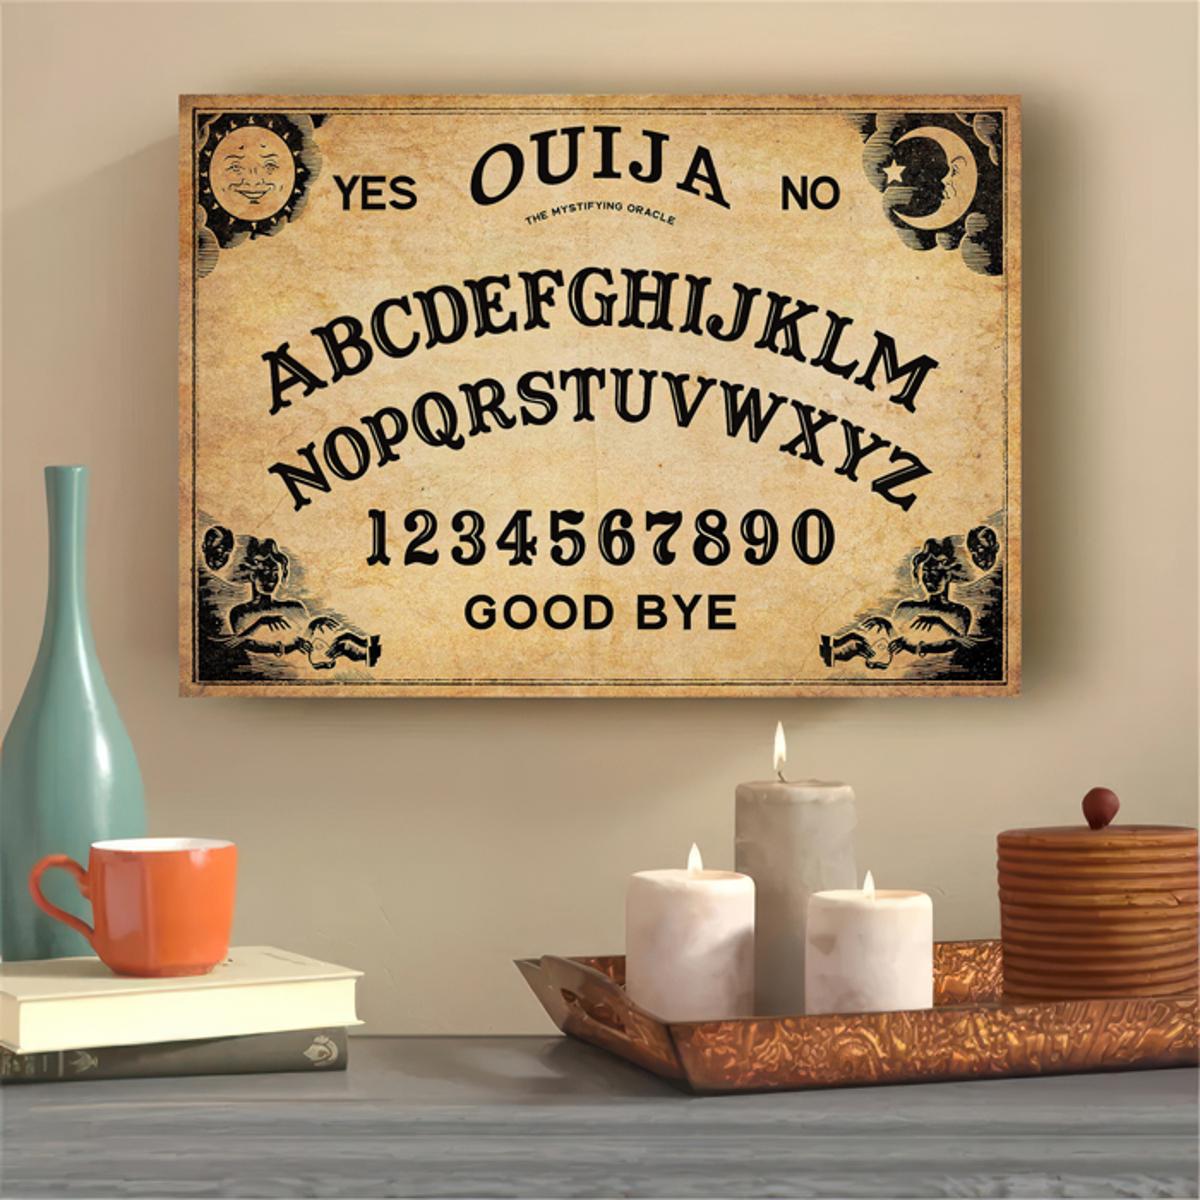 Conjunto de tablero Ouija